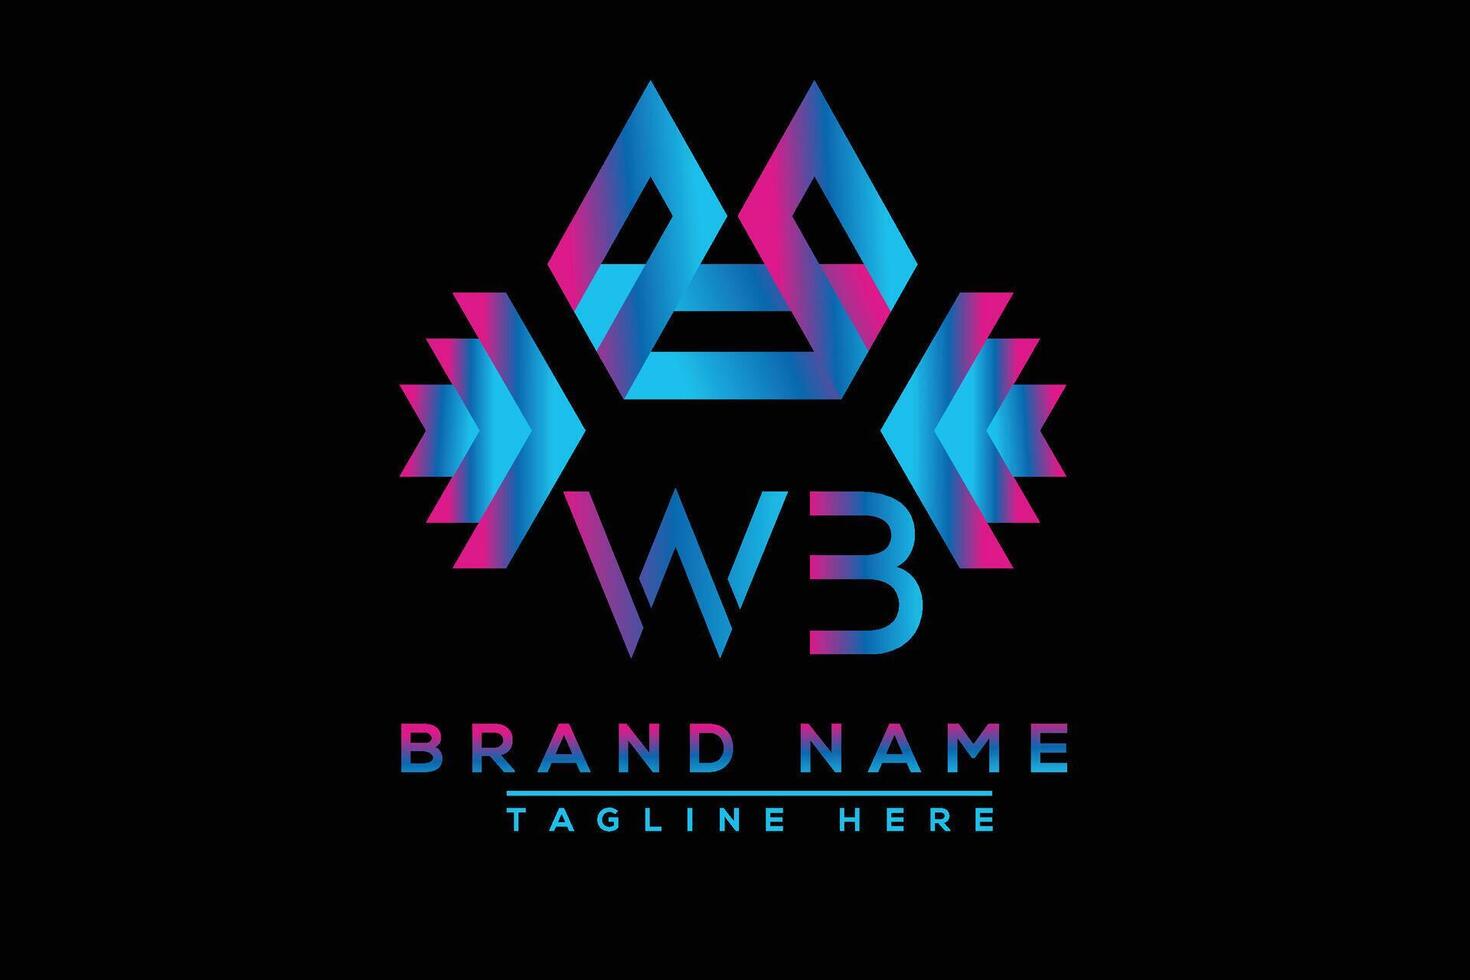 WB letter logo design. Vector logo design for business.